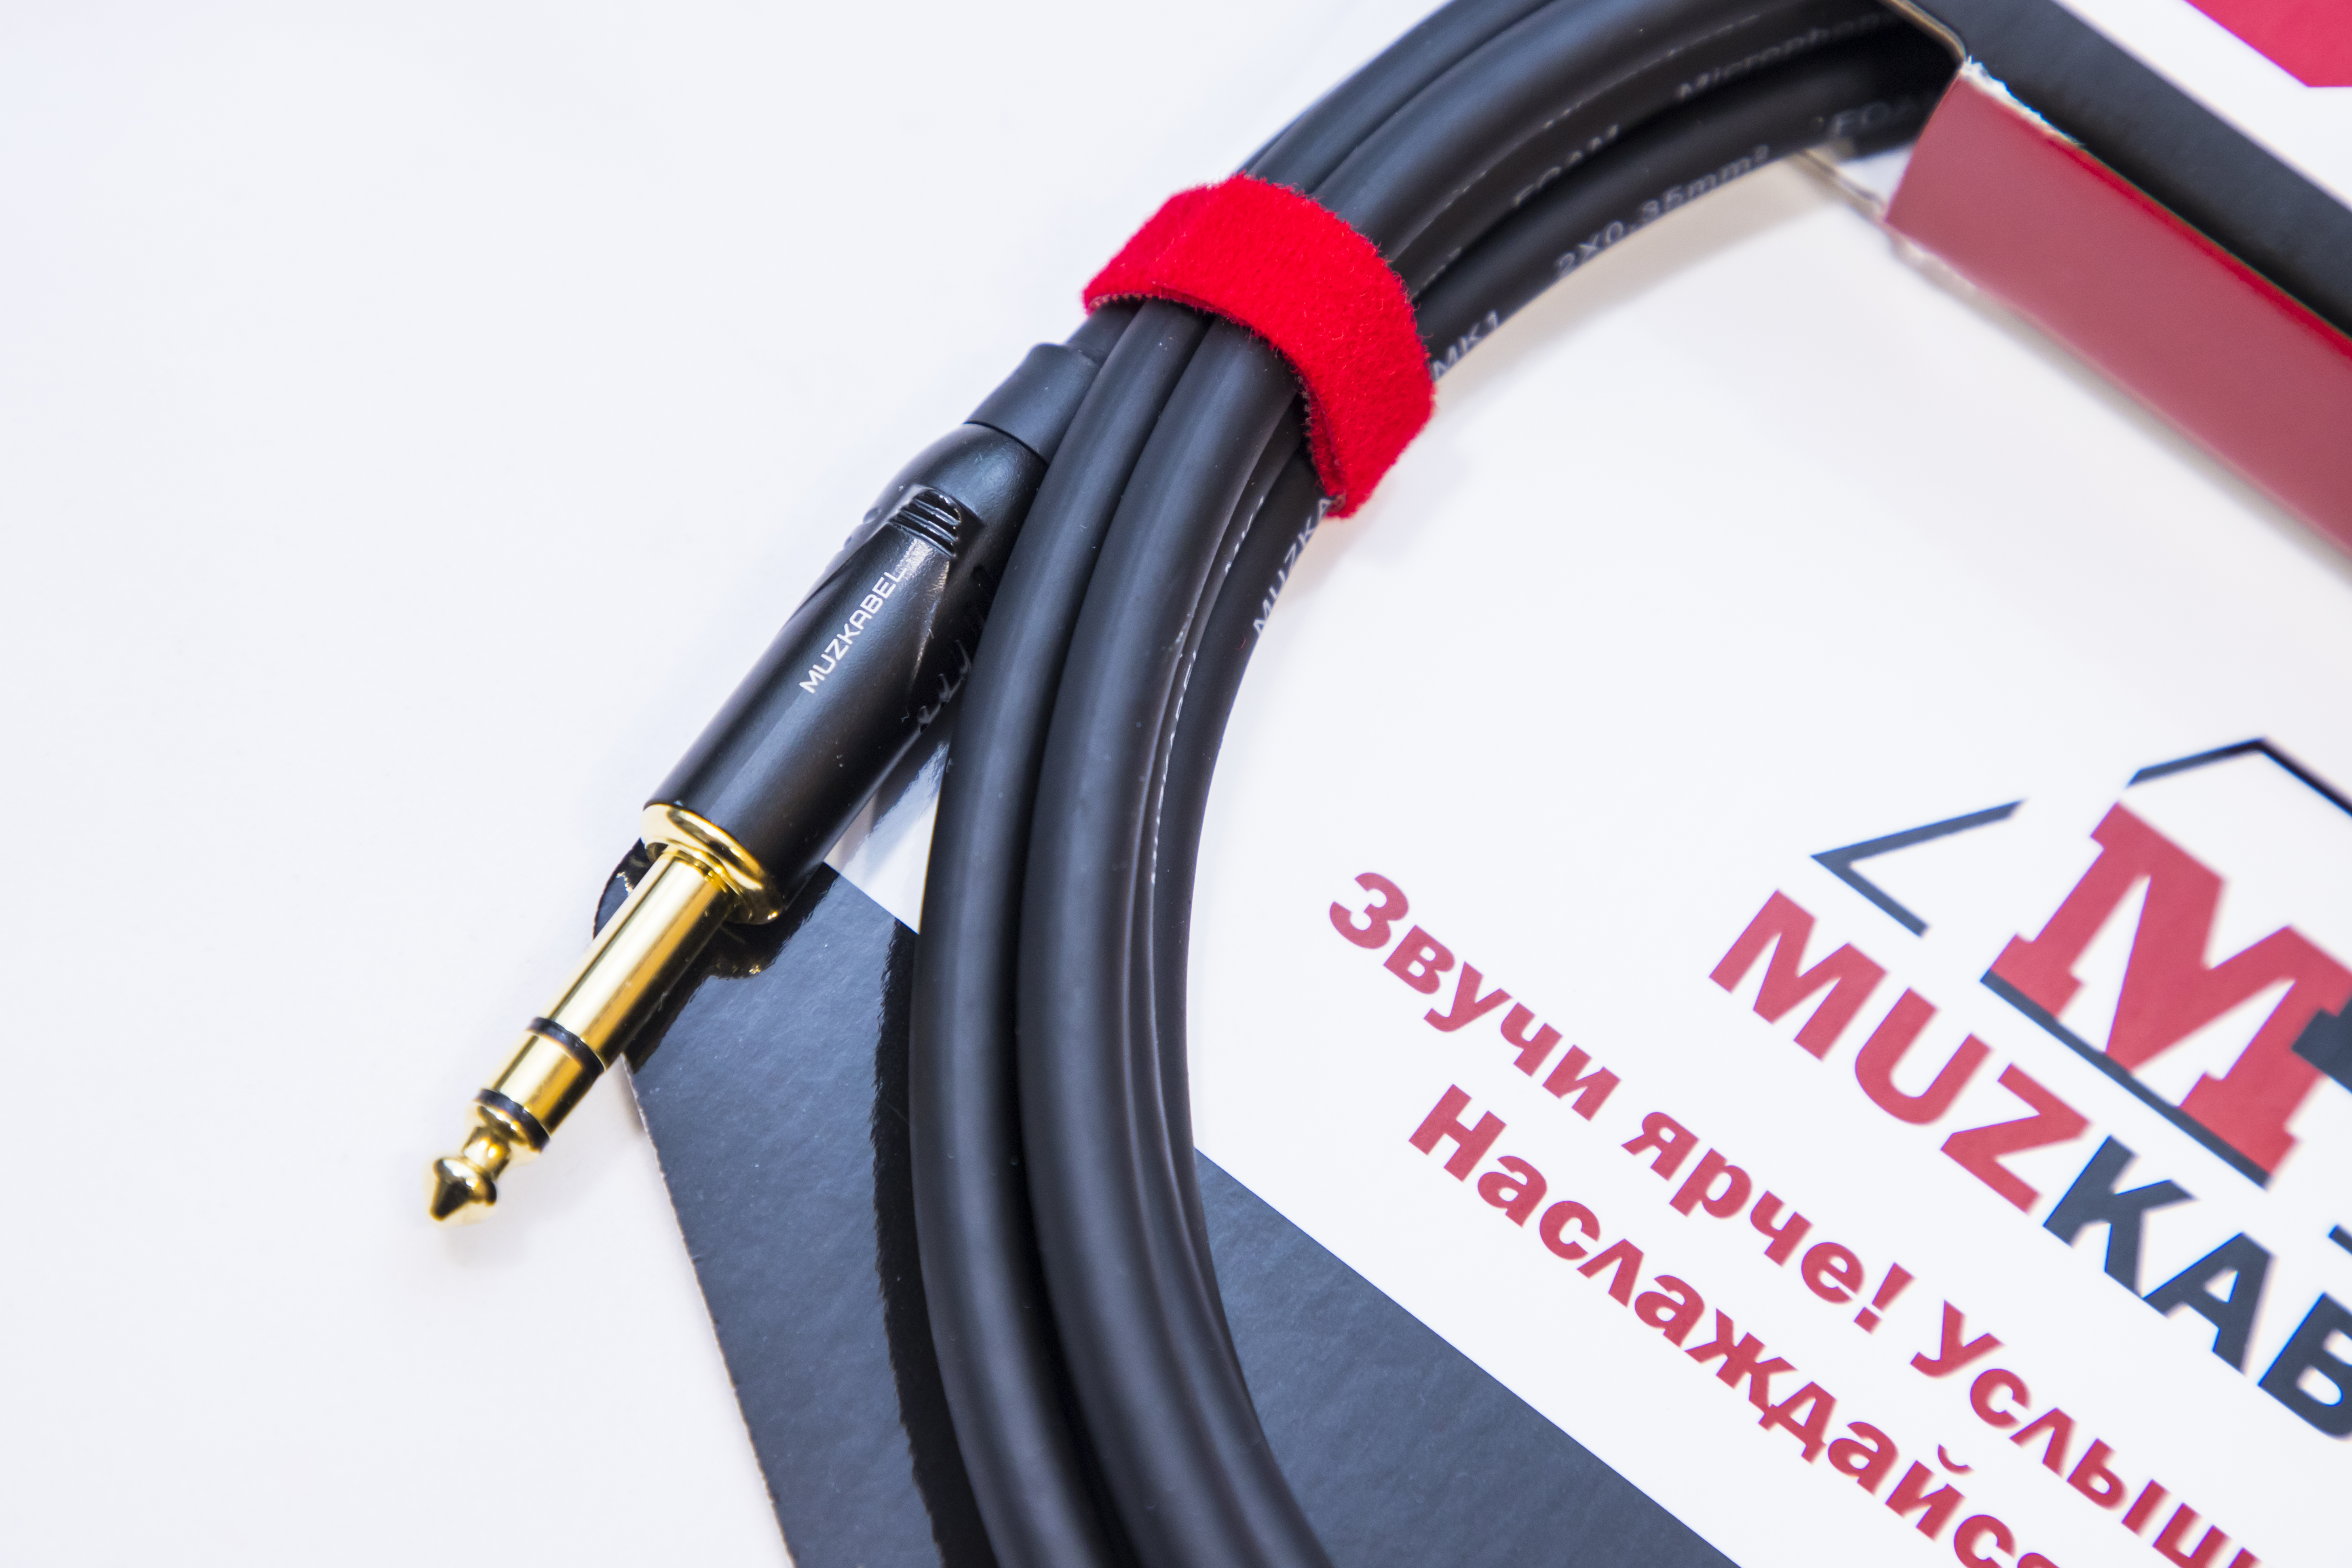 Аудио кабель MUZKABEL BXRMK3 - 10 метров, XLR (папа) - JACK (стерео)